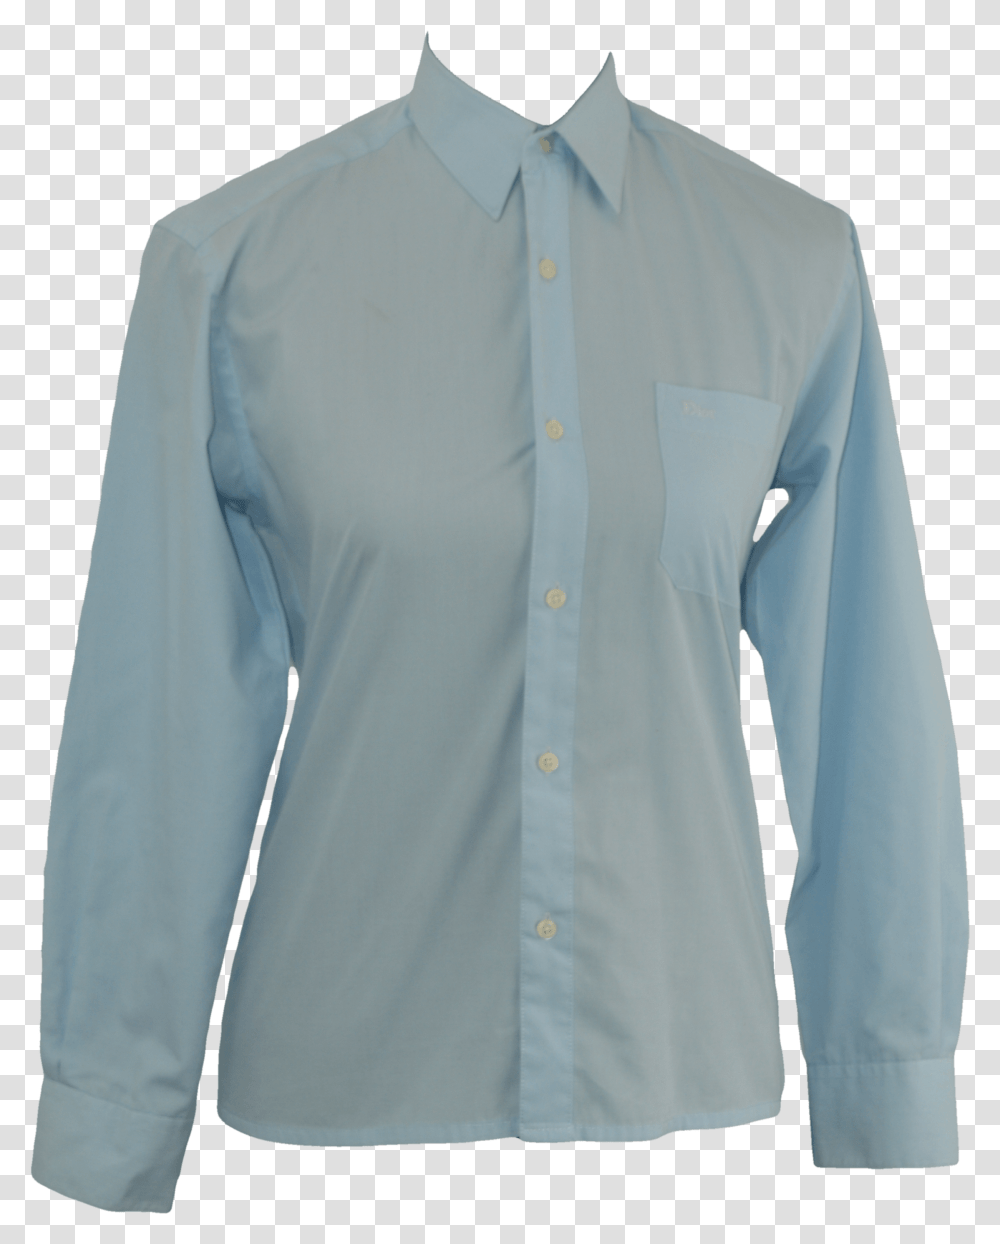 Button, Apparel, Shirt, Dress Shirt Transparent Png